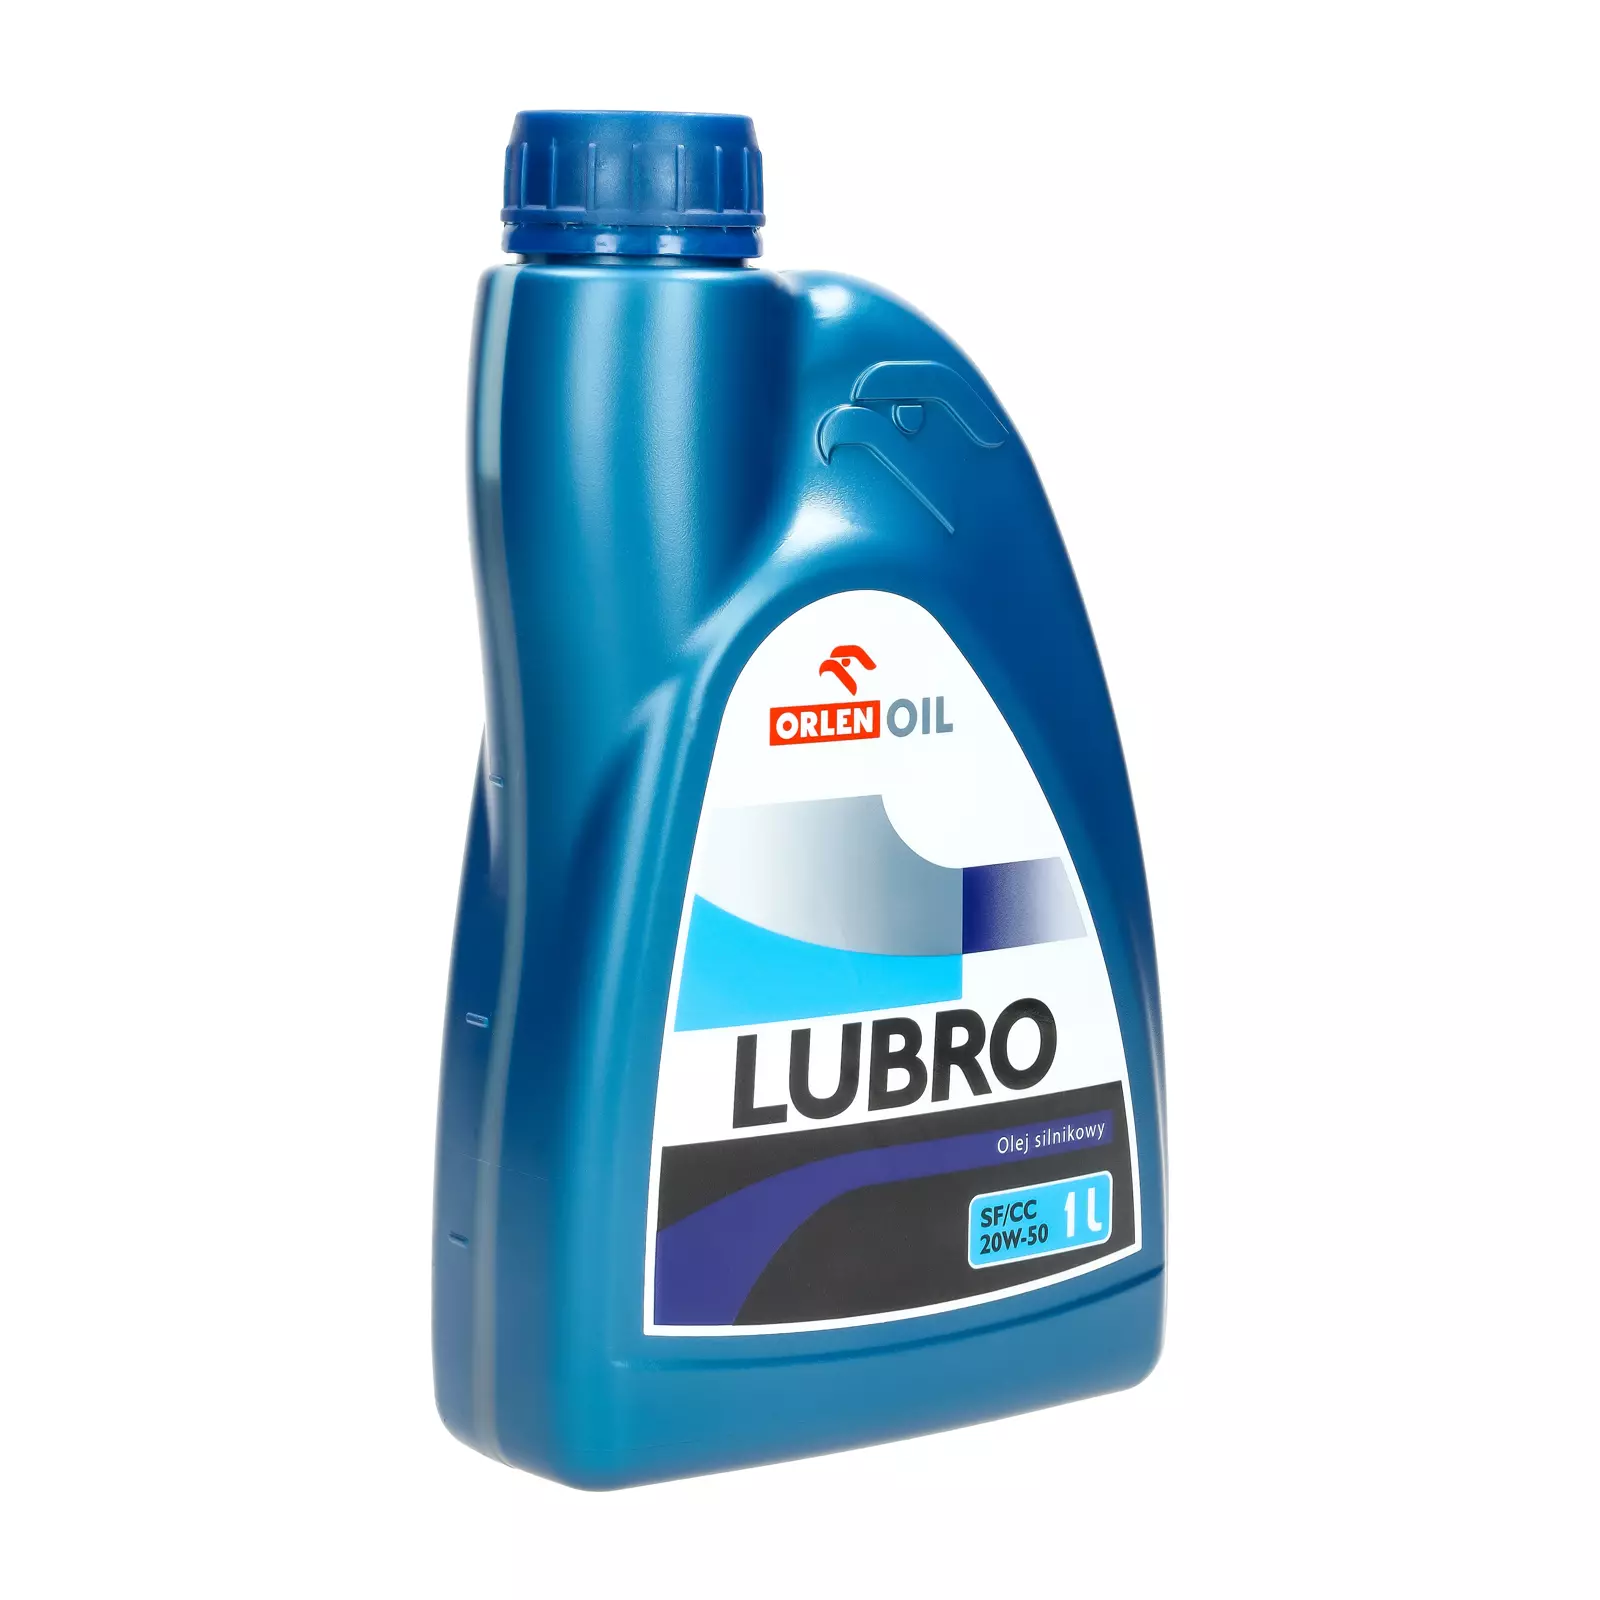 Orlen Oil Lubro SF/CC 20W-50 1л моторное масло, QFS272B10